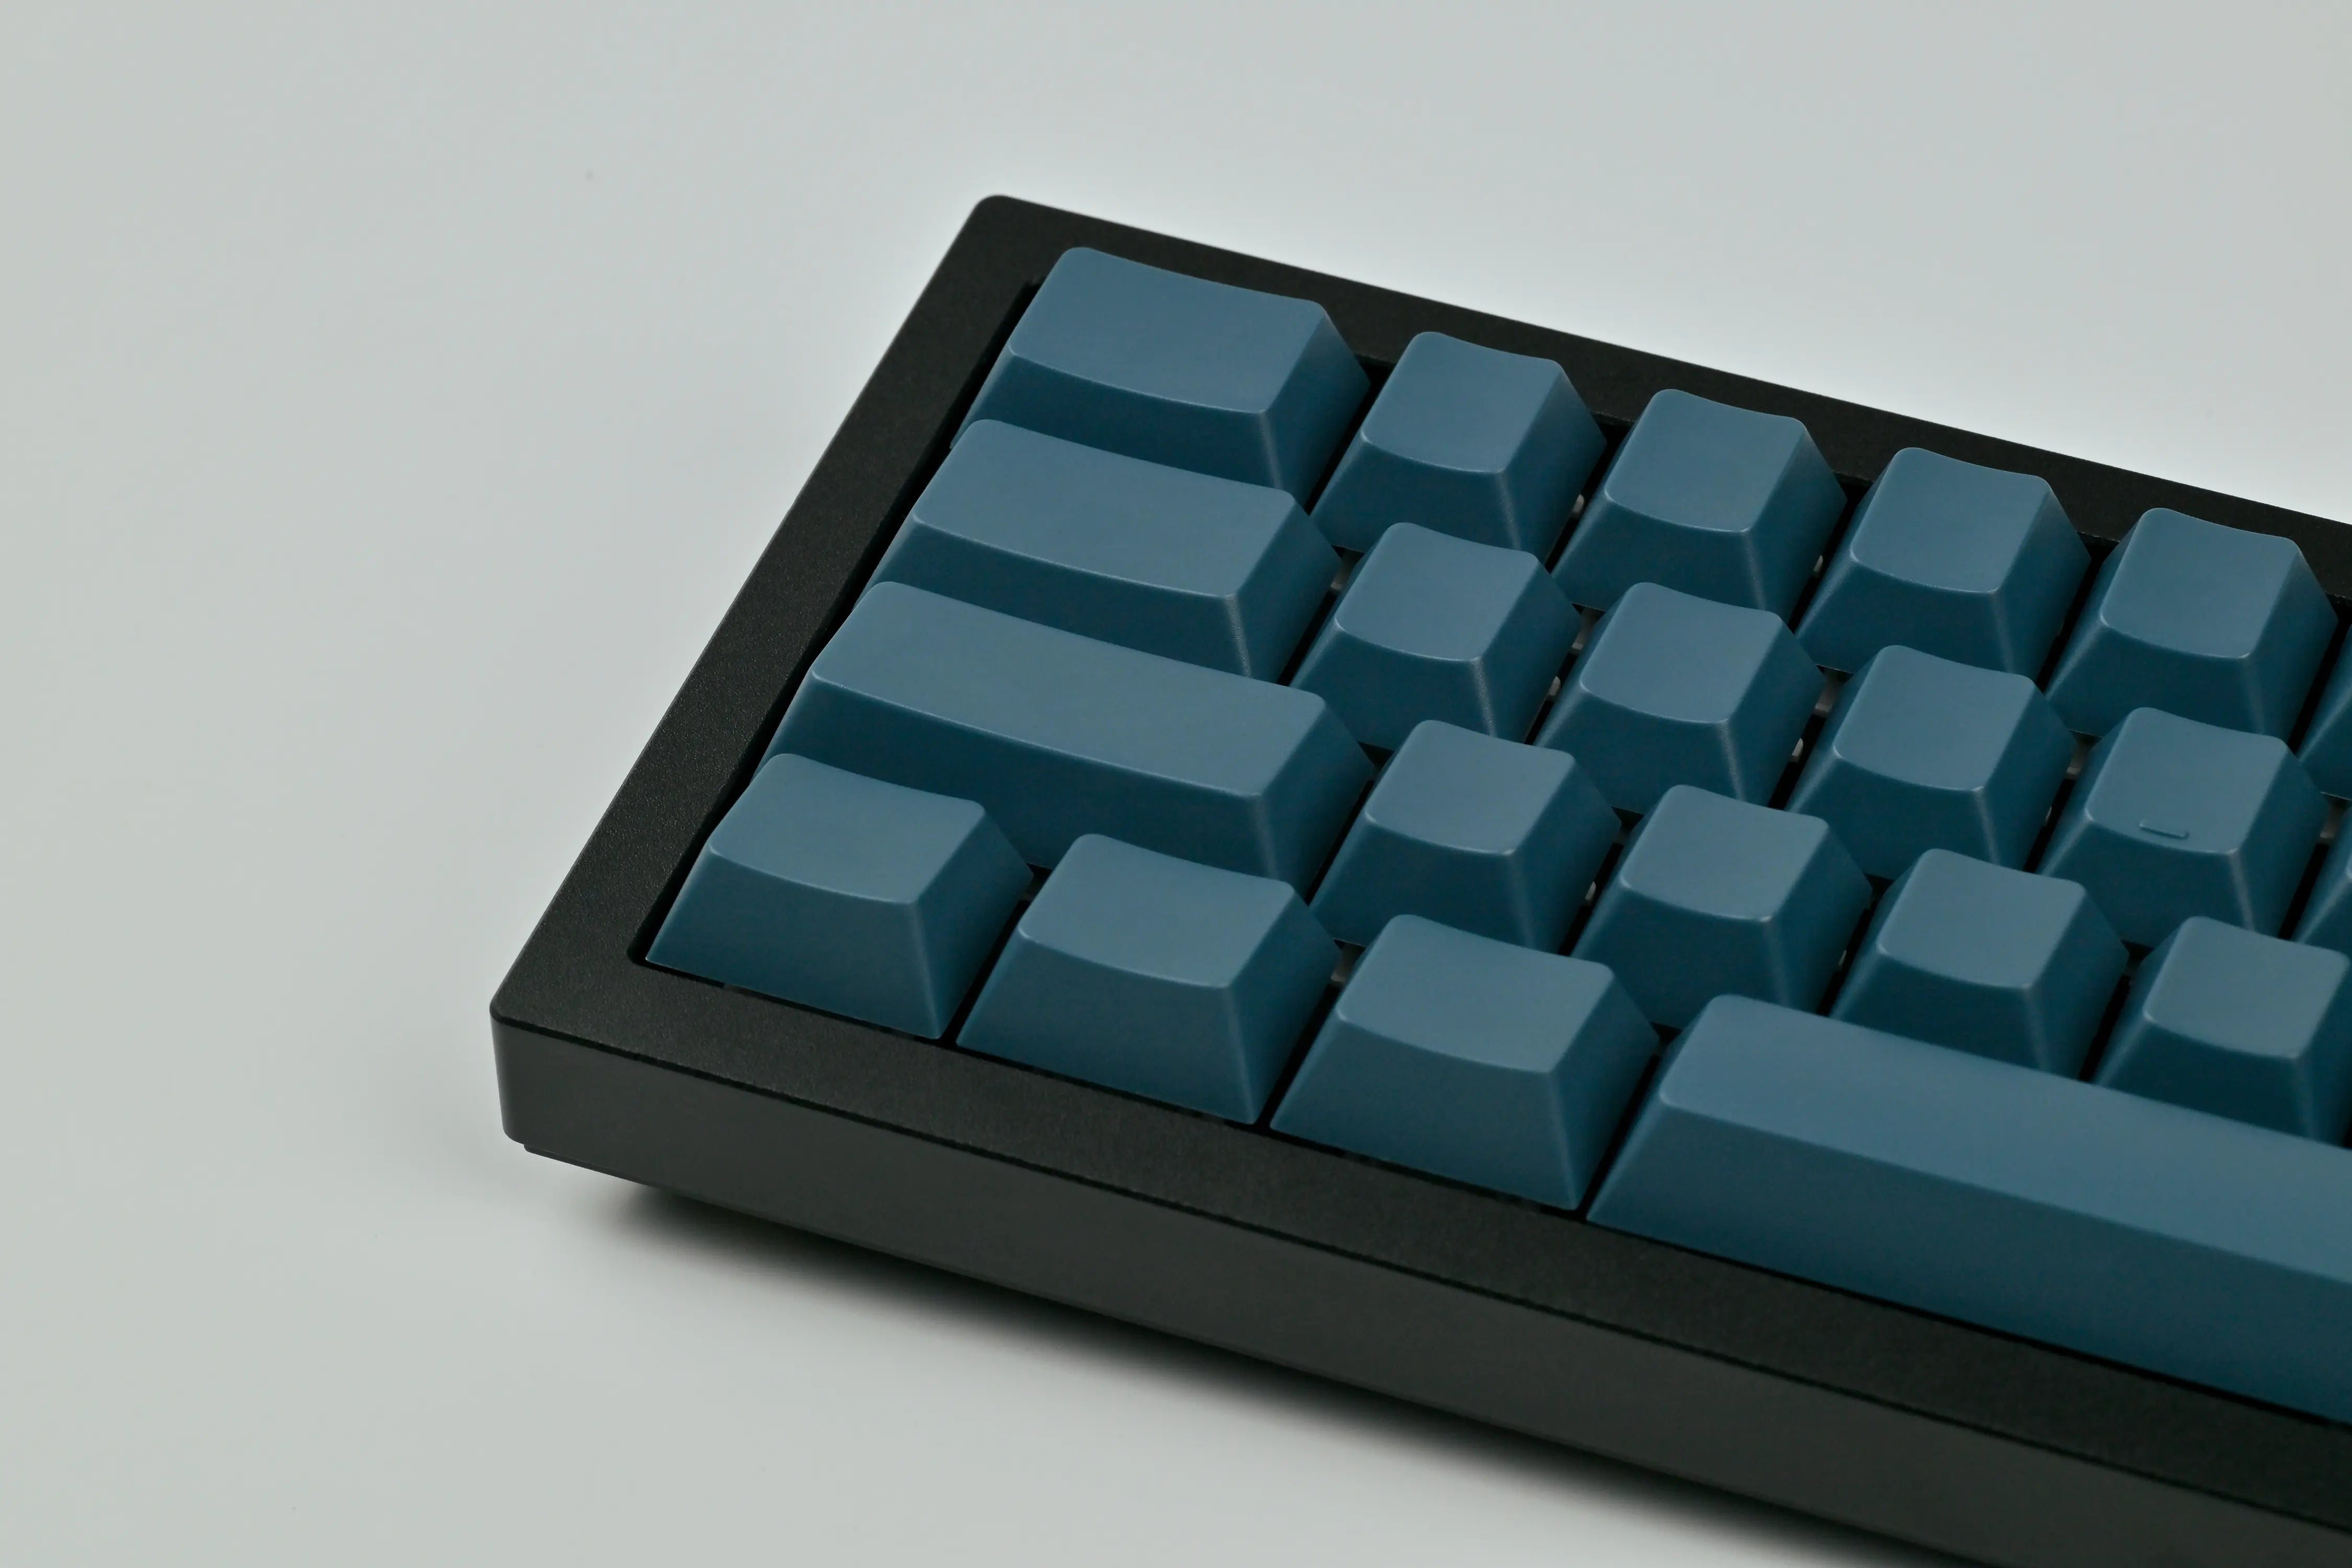 Keyreative ABS Cherry Profile Grey-Blue Blank Keycaps